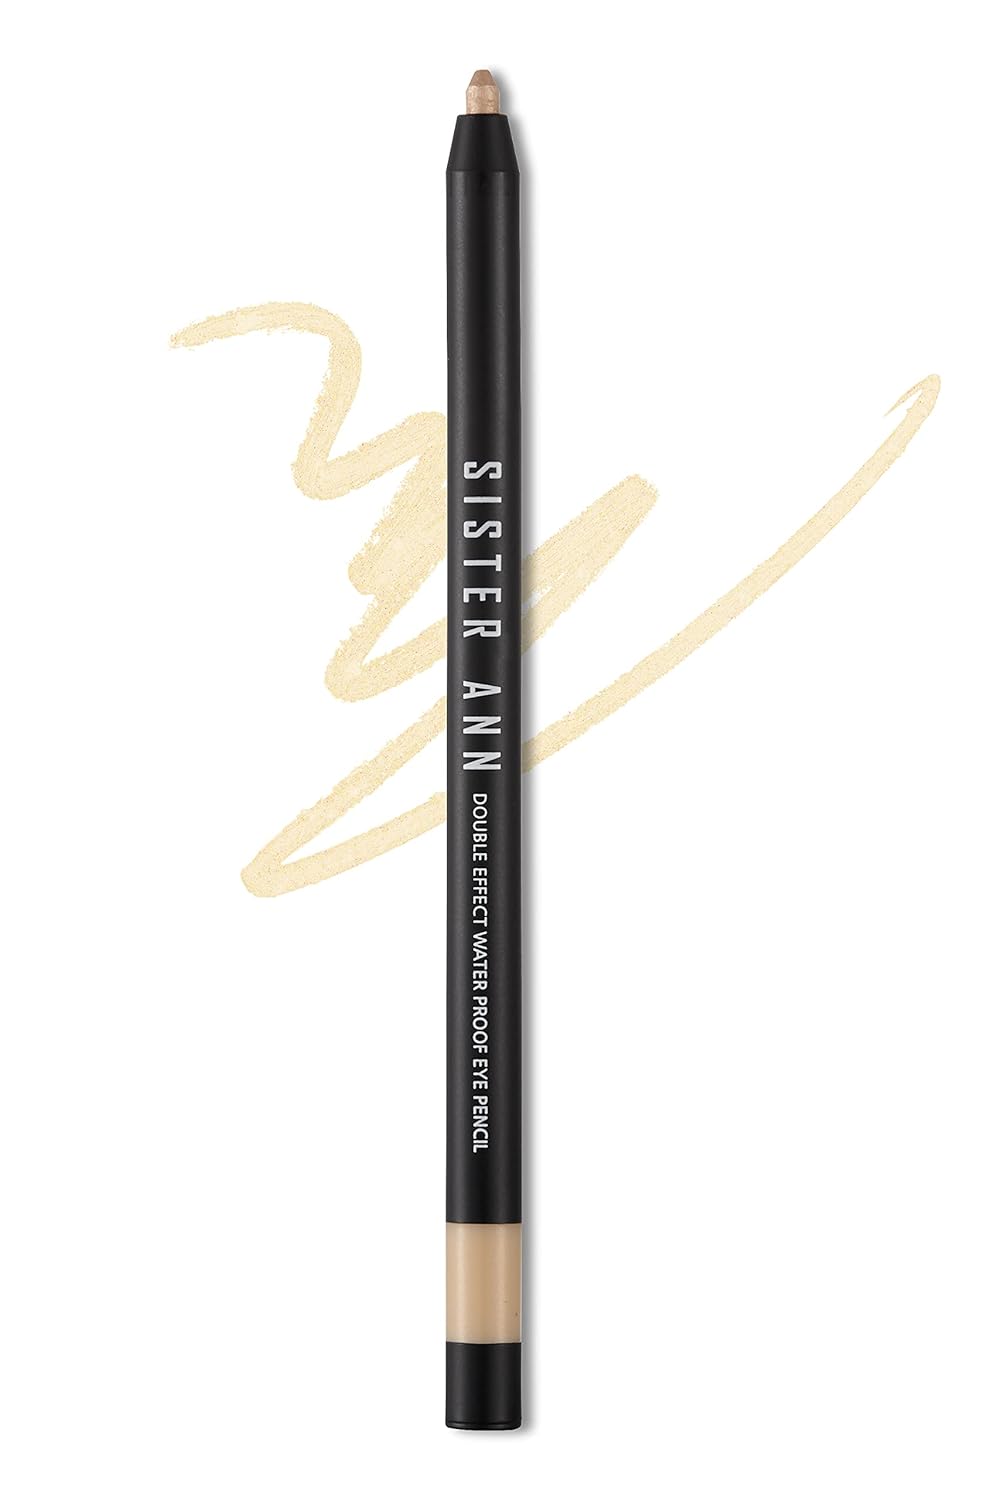 SISTER ANN Double Effect Waterproof Eye Pencil eye liner+eye shadow built-in sharpener Korea cosmetic 0.5g 05_Champagne Gold